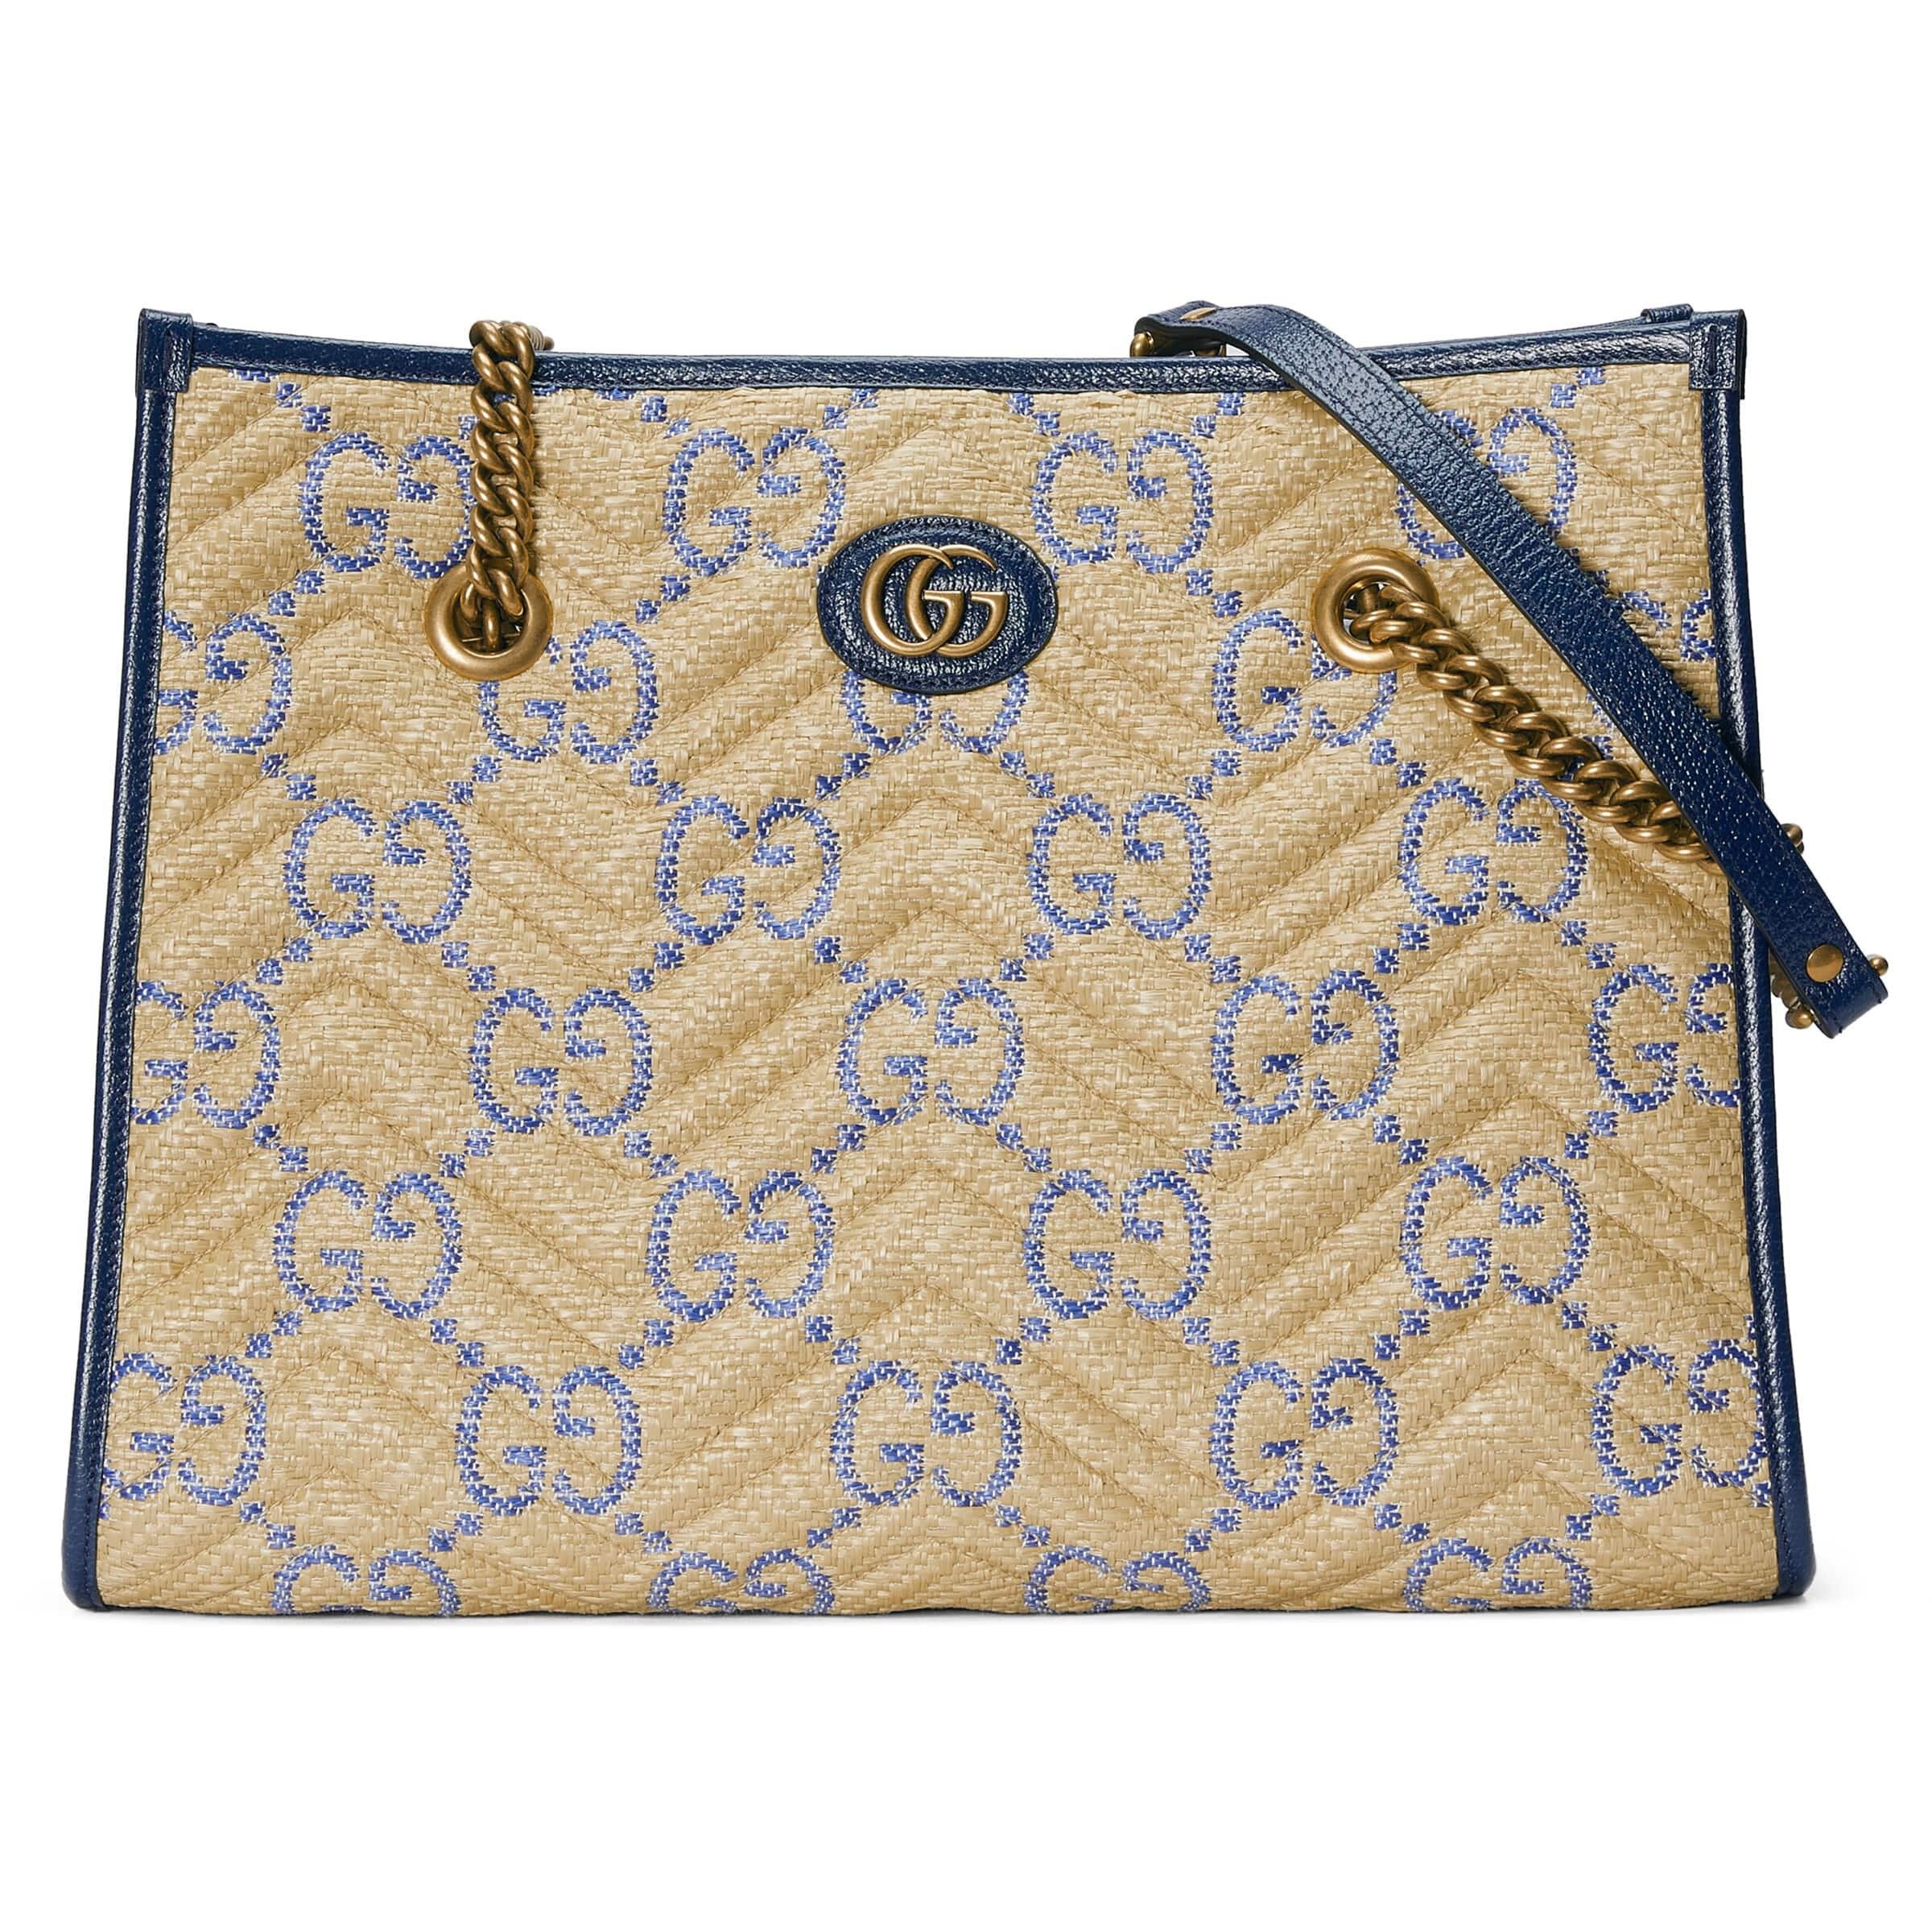 Black Gucci Tote Bags: Shop at $690.00+